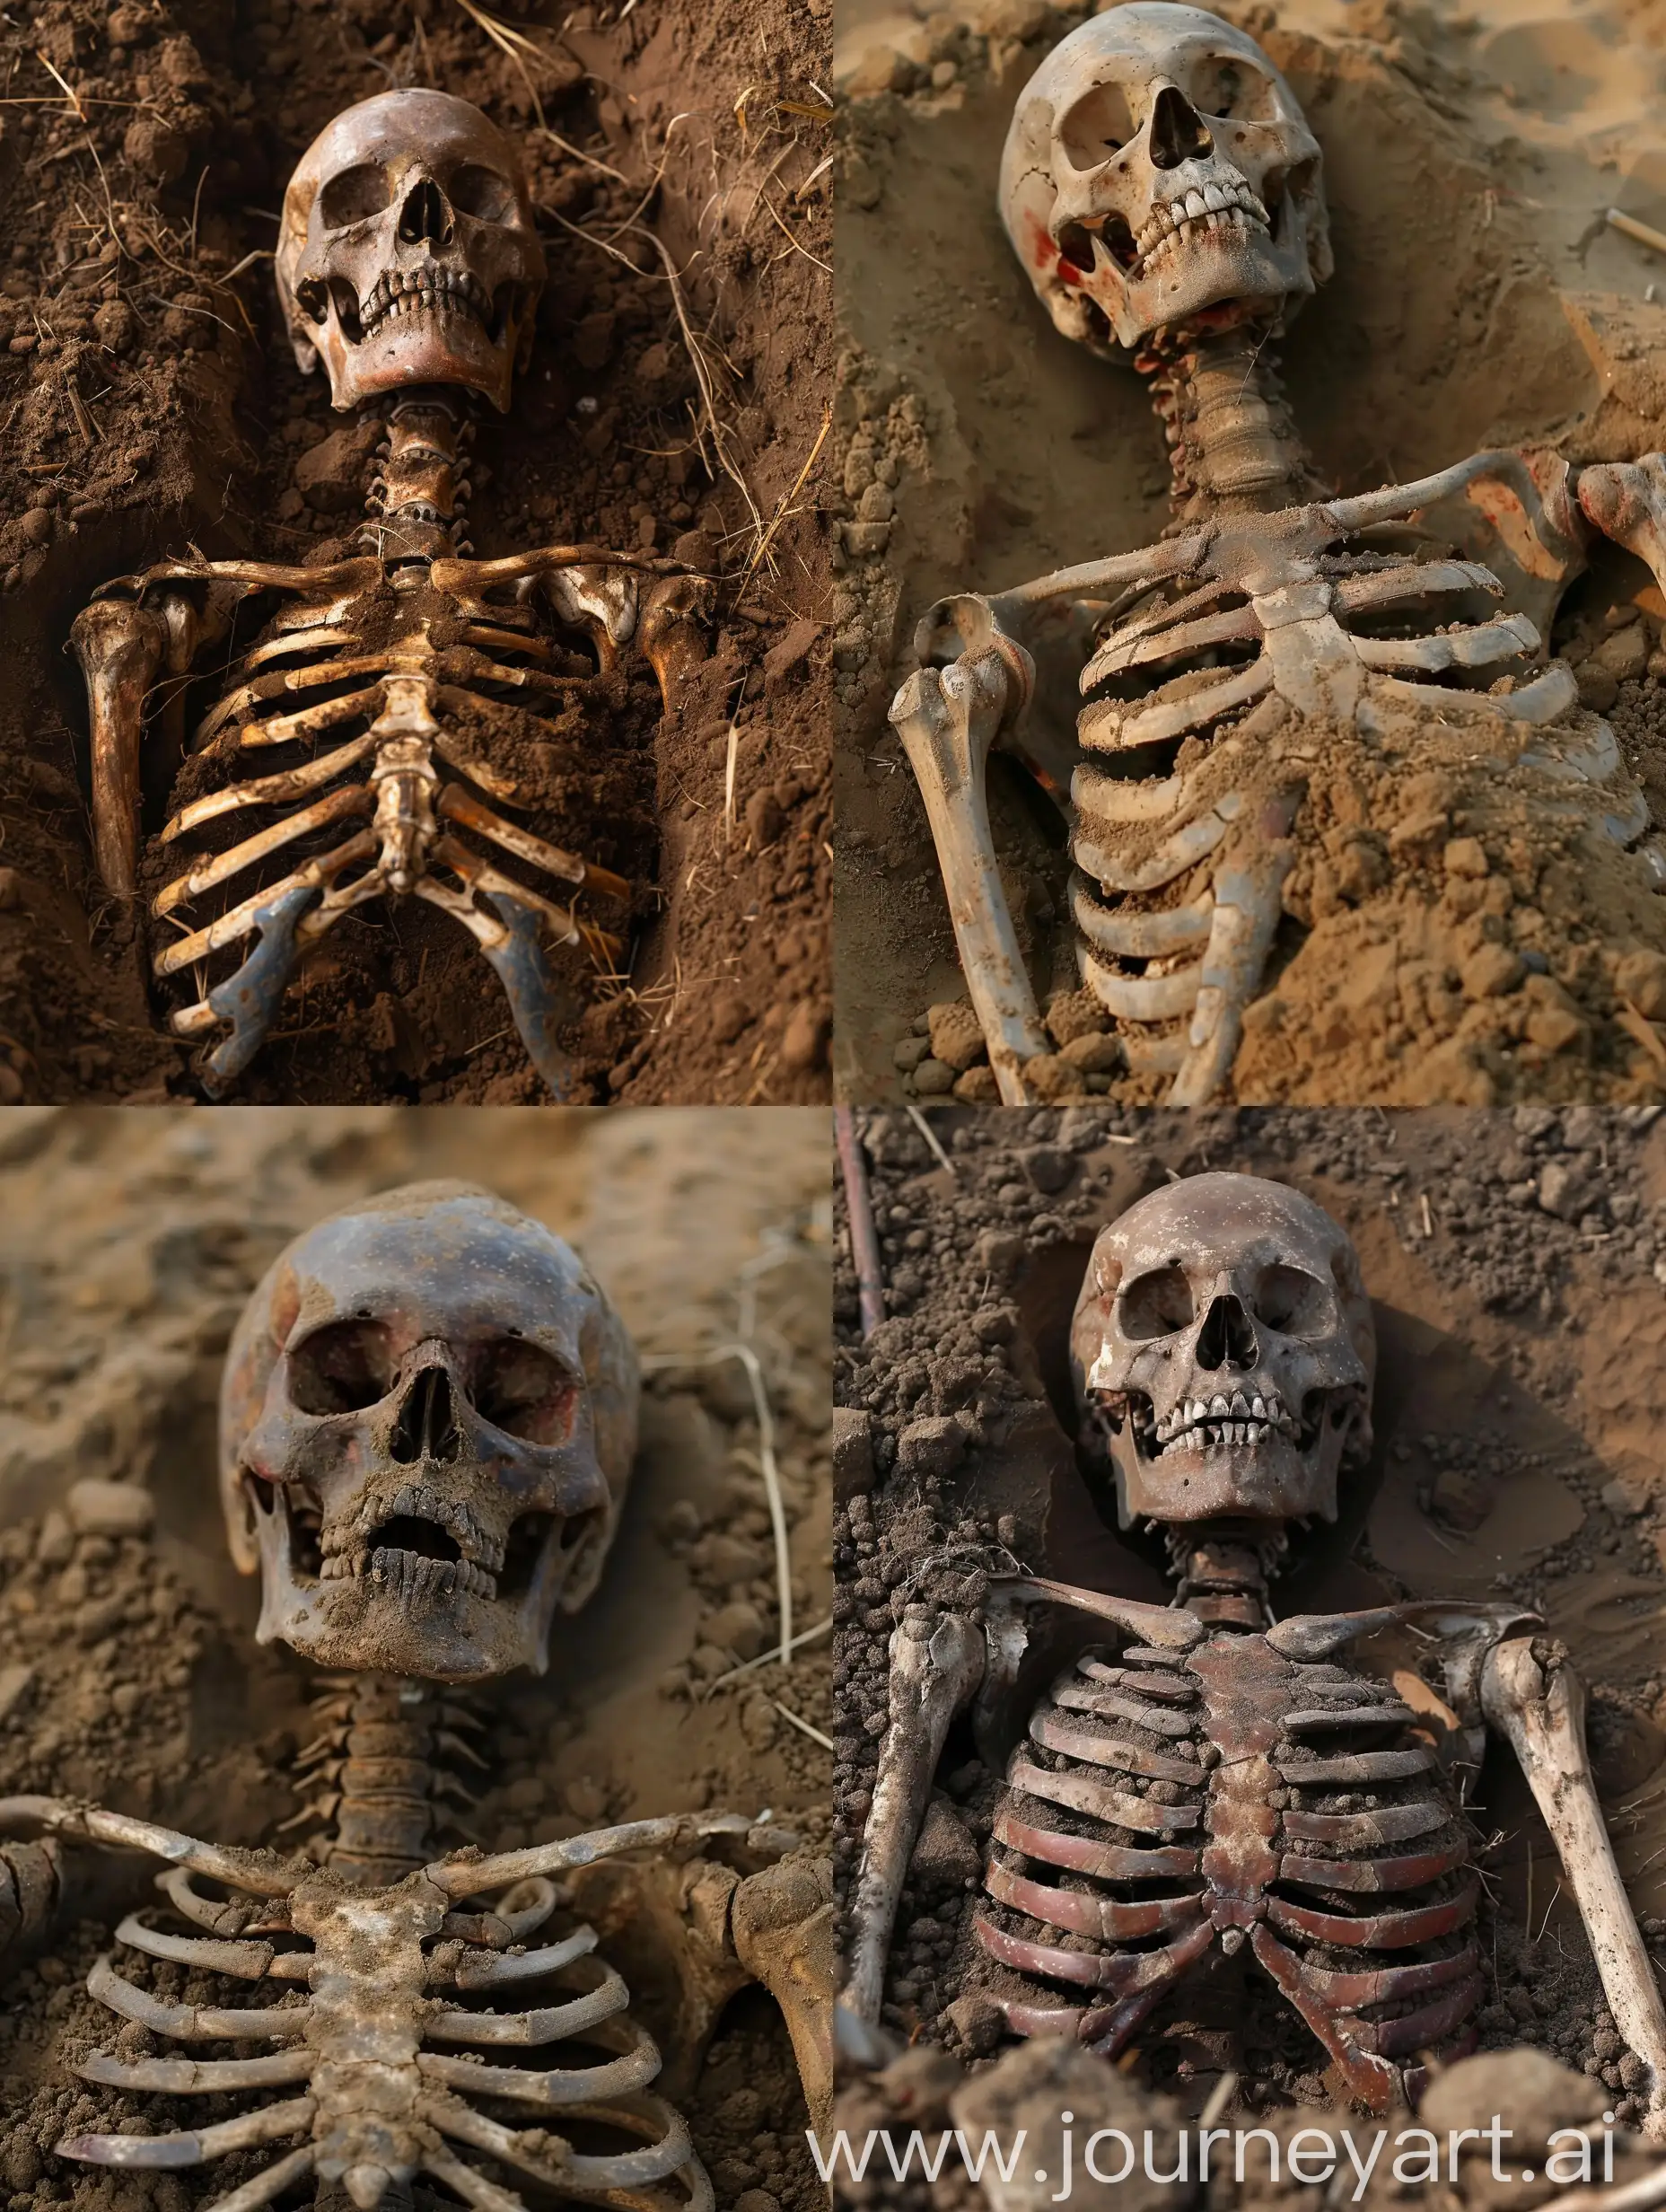 Medieval skeleton buried in the soil